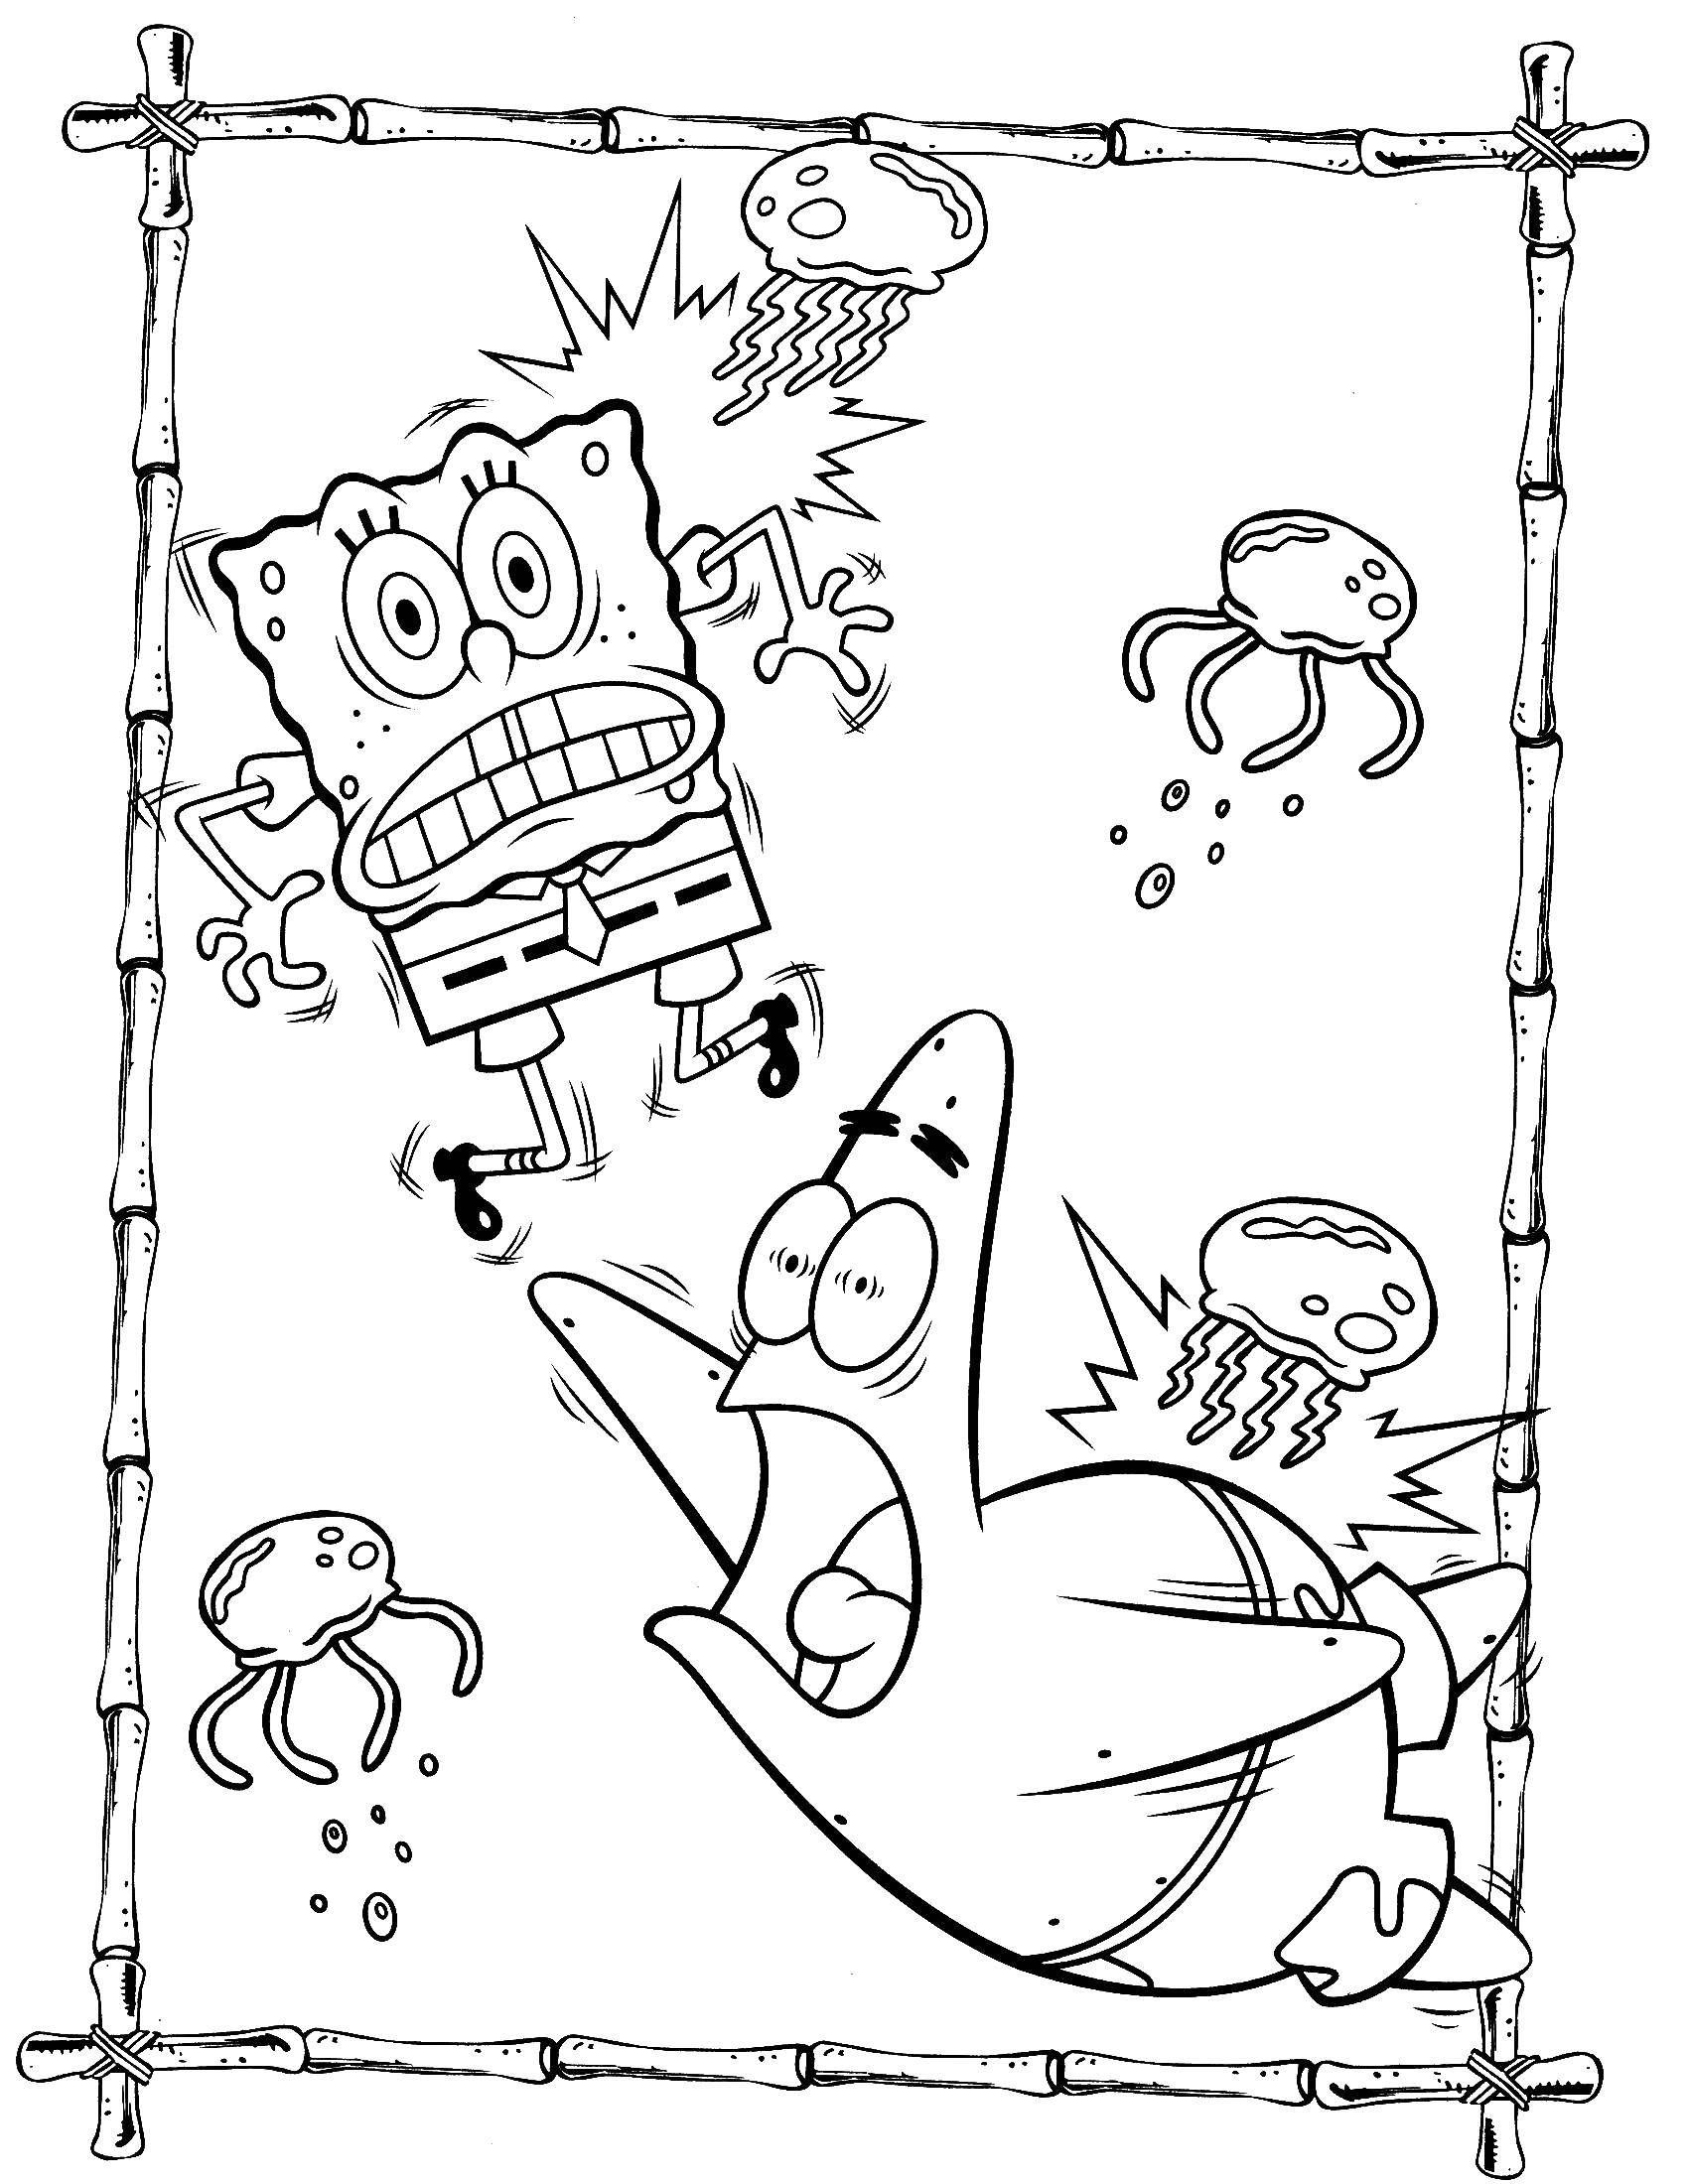 Coloring Spongebob and Patrick run away from the jellyfish. Category Spongebob. Tags:  spongebob, Patrick.